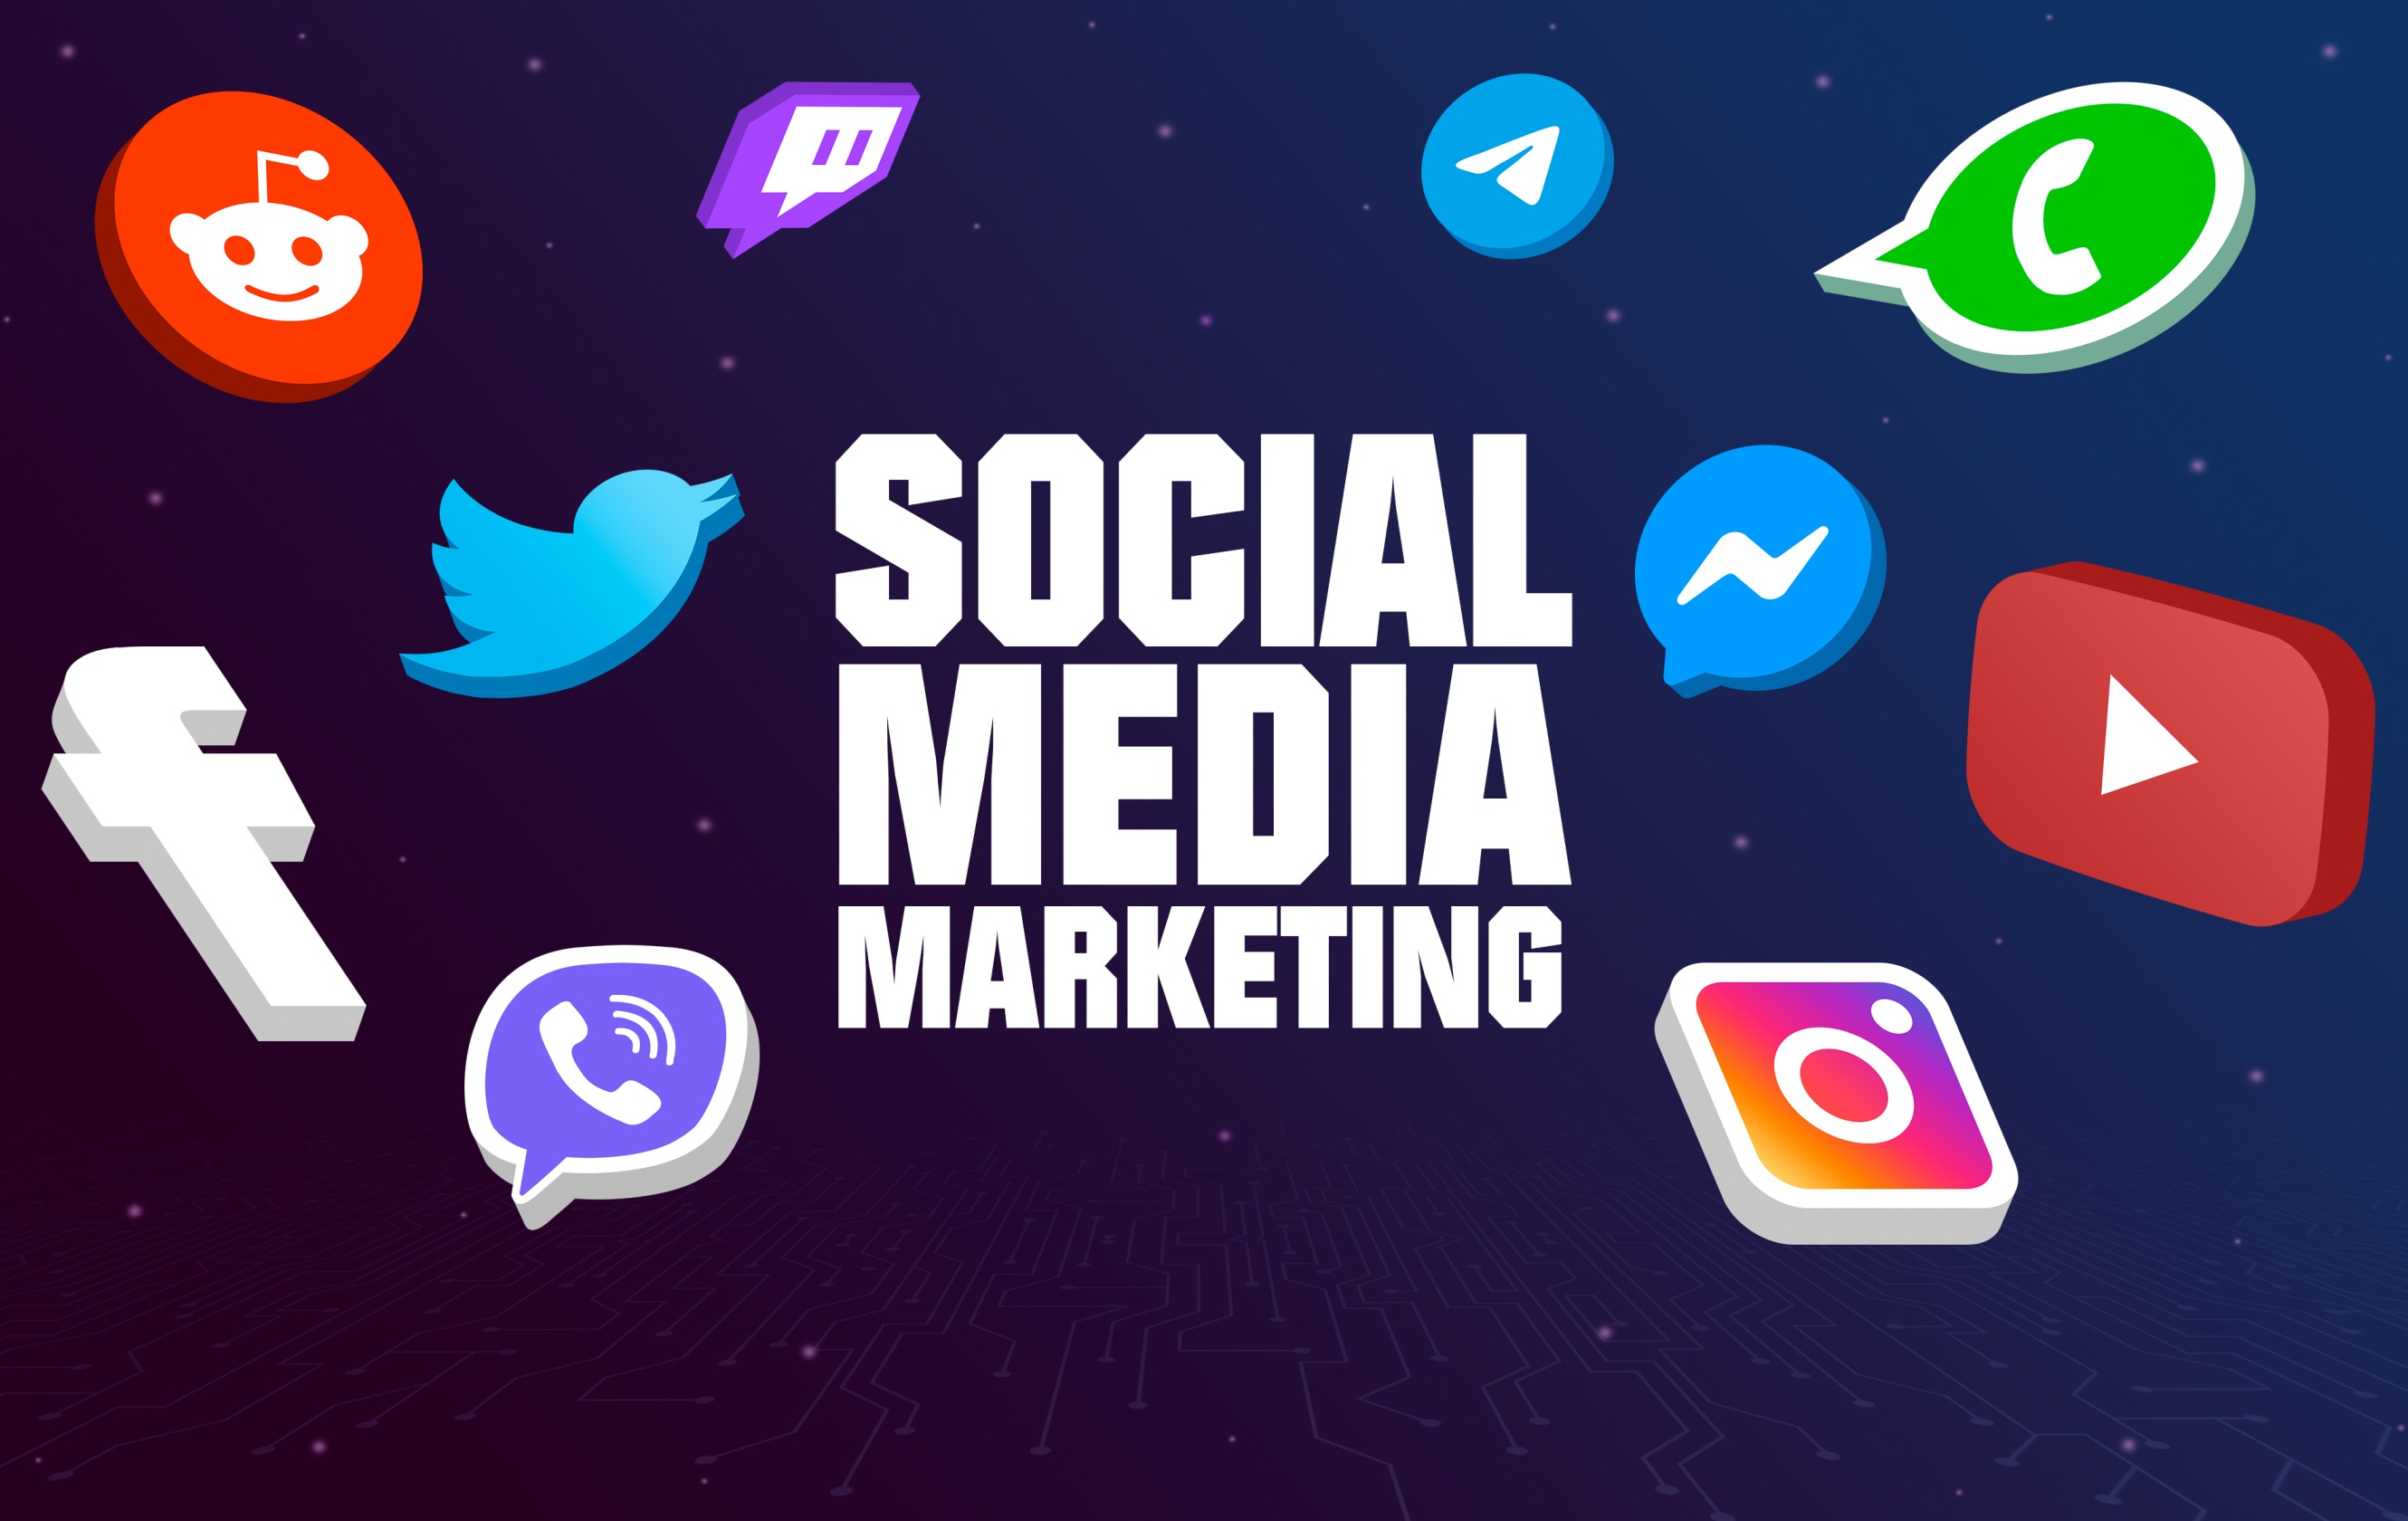 Social Media Marketing Services image